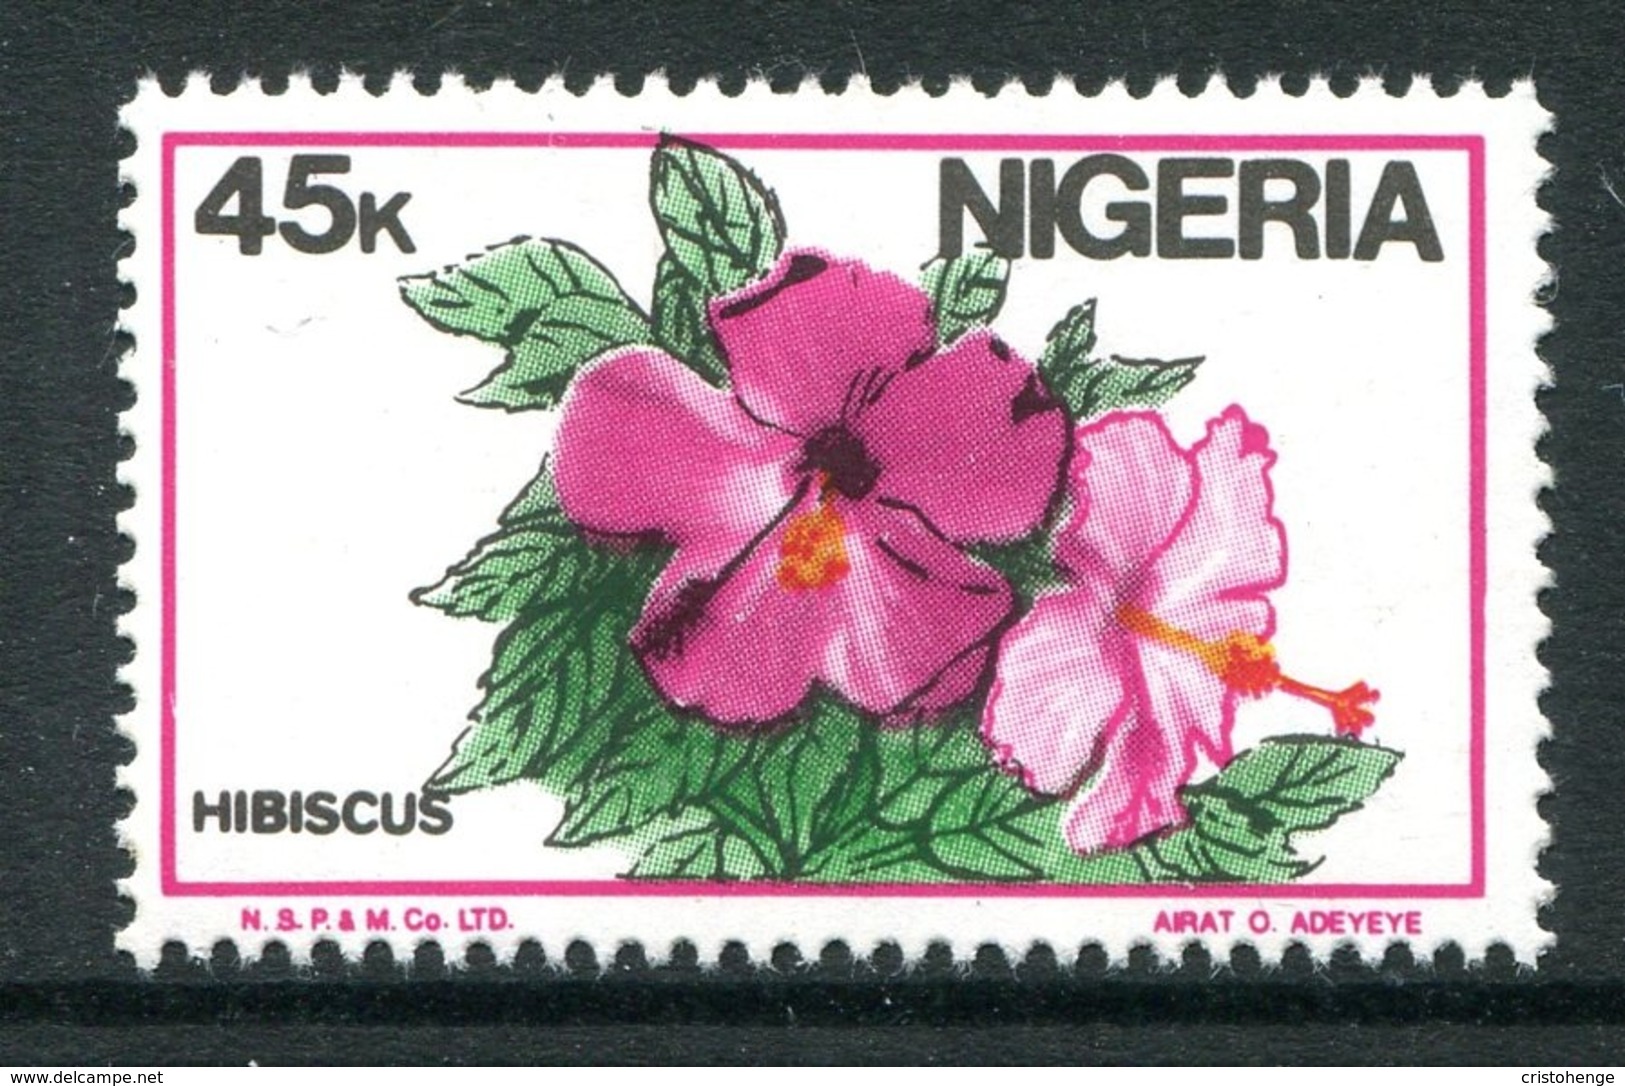 Nigeria 1986-98 Nigerian Life - 45k Hibiscus MNH (SG 522) - Nigeria (1961-...)